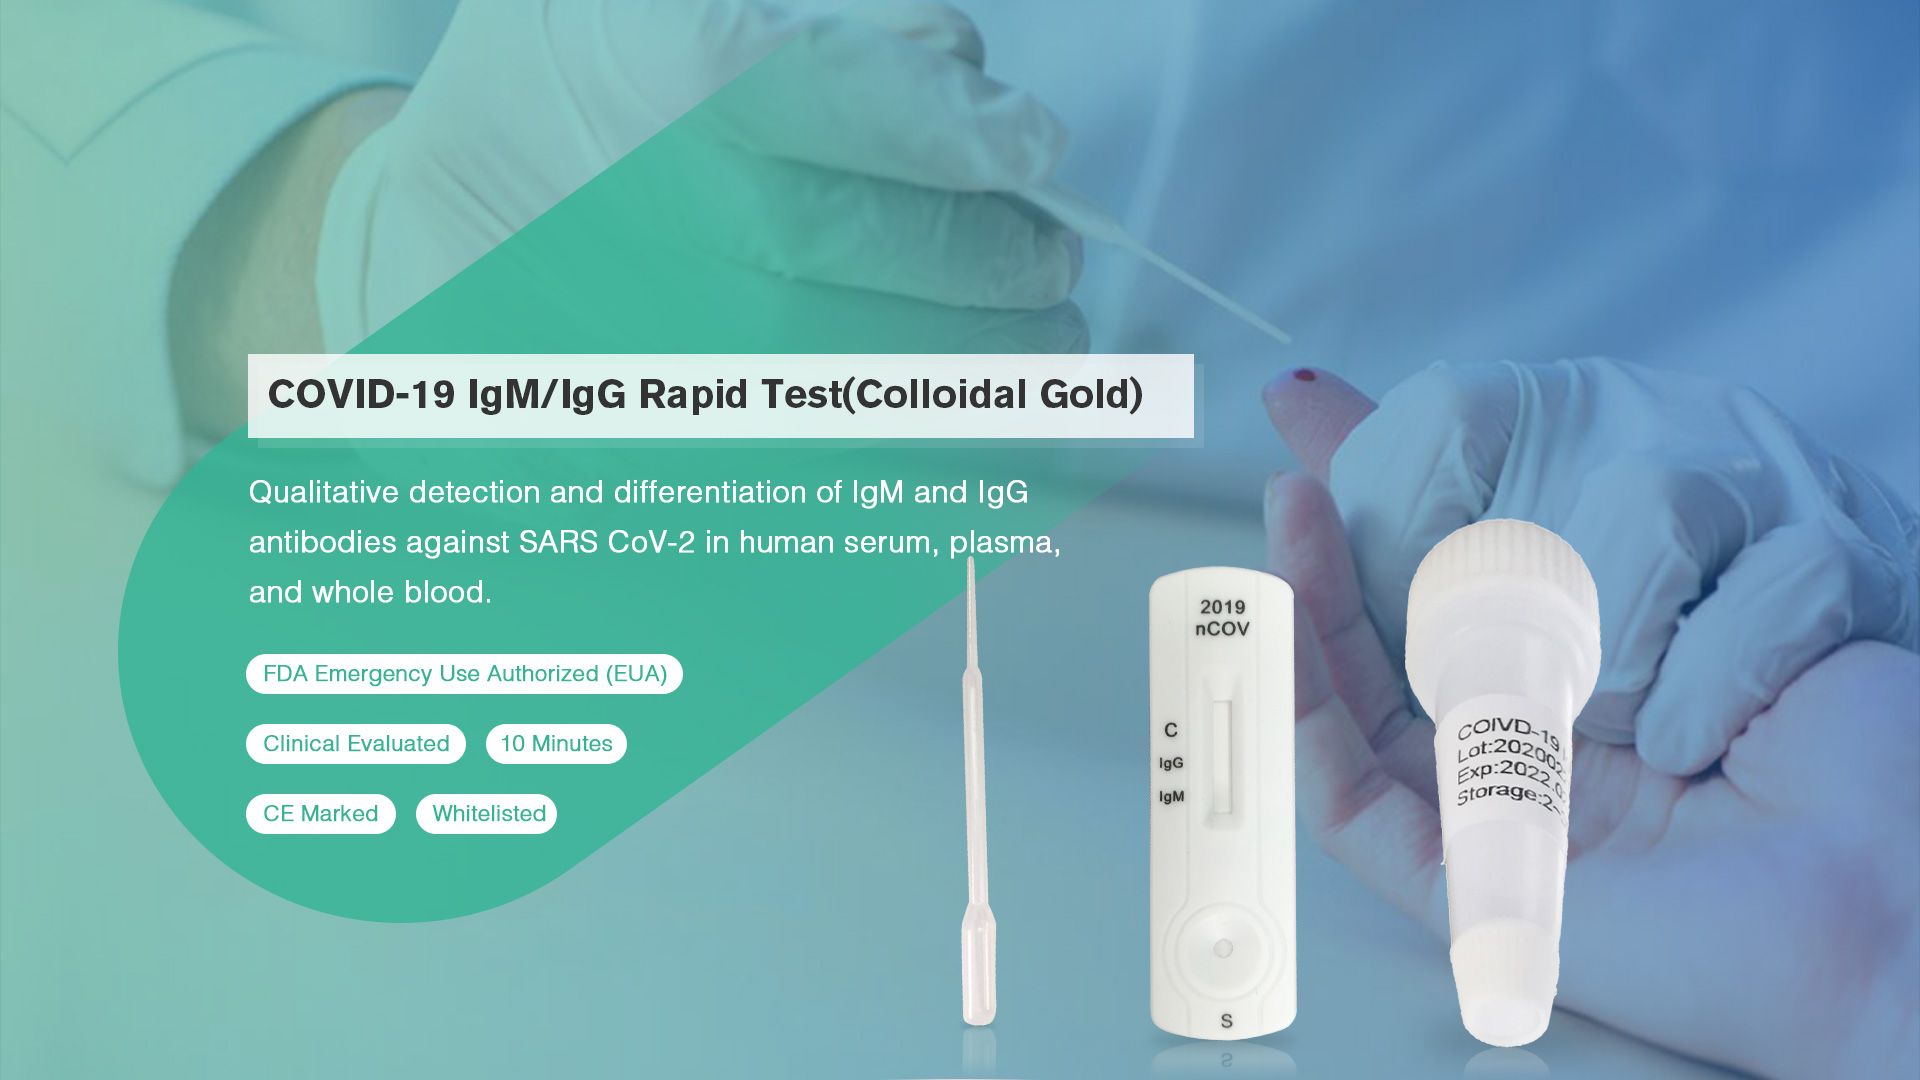 COVID-19 IGM/IGG Rapid Test